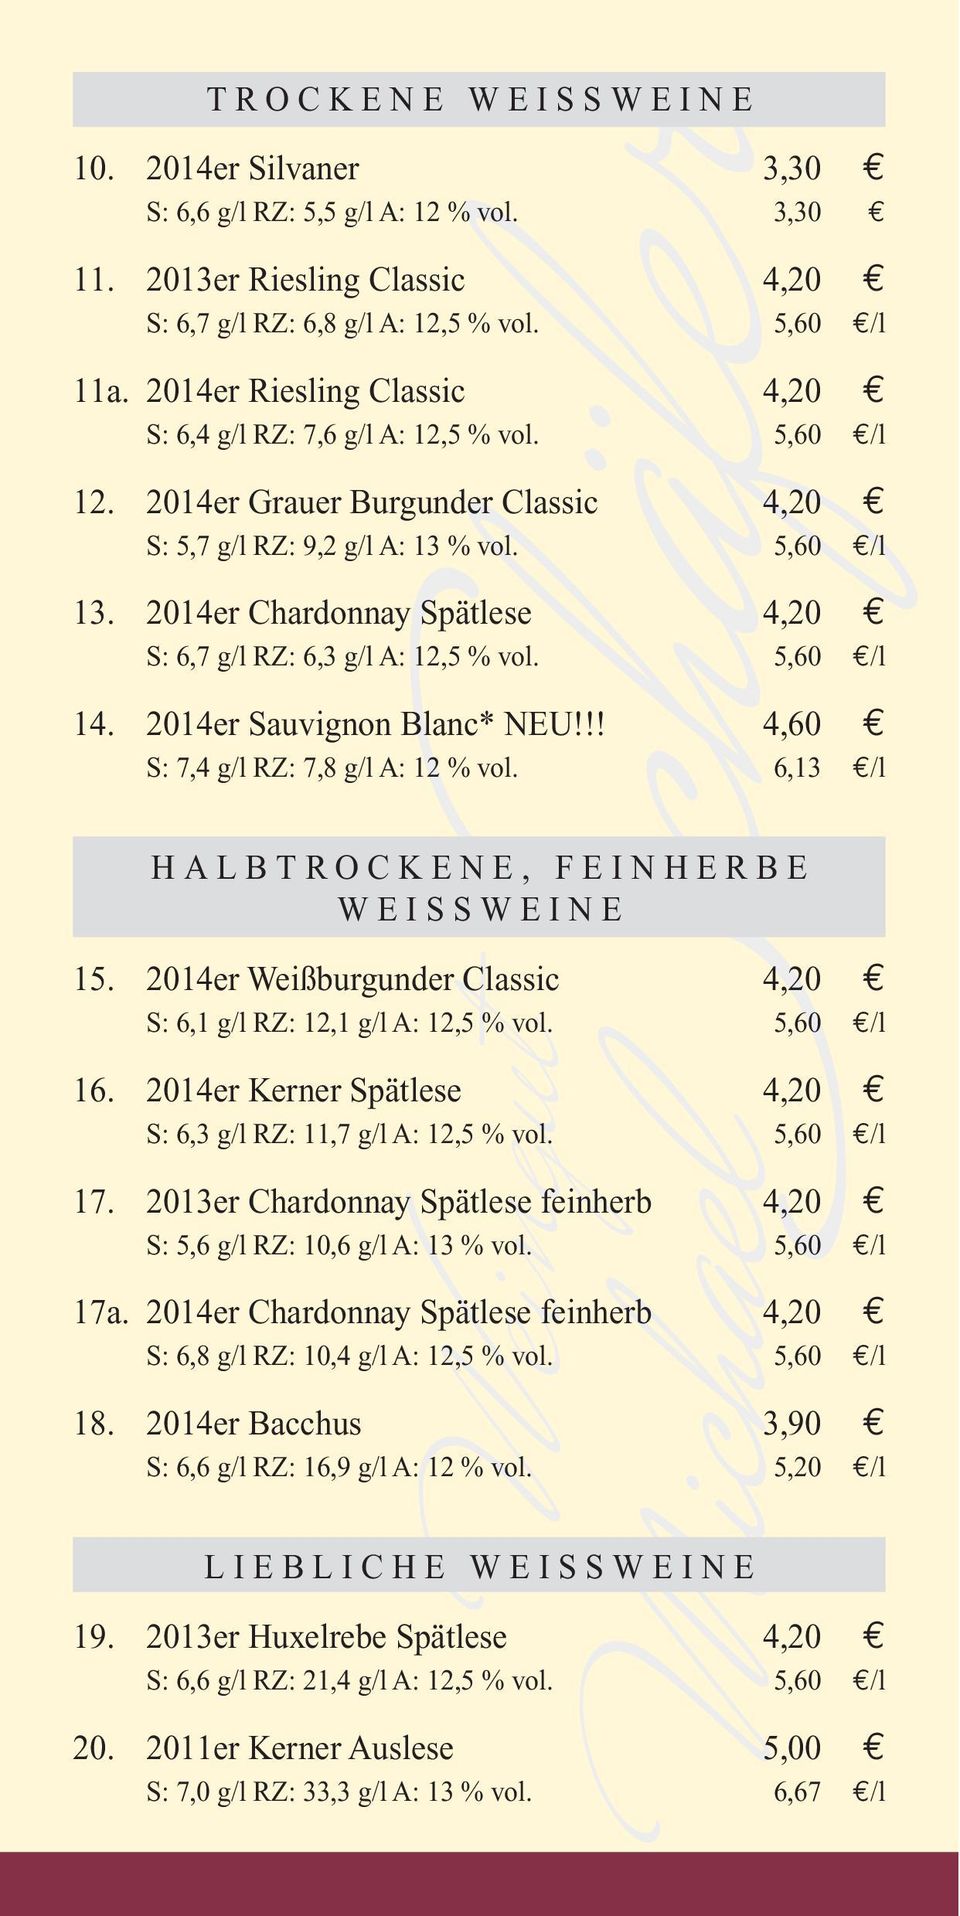 2014er Chardonnay Spätlese 4,20 S: 6,7 g/l RZ: 6,3 g/l A: 12,5 % vol. 5,60 /l 14. 2014er Sauvignon Blanc* NEU!!! 4,60 S: 7,4 g/l RZ: 7,8 g/l A: 12 % vol. 6,13 /l HALBTROCKENE, FEINHERBE WEISSWEINE 15.